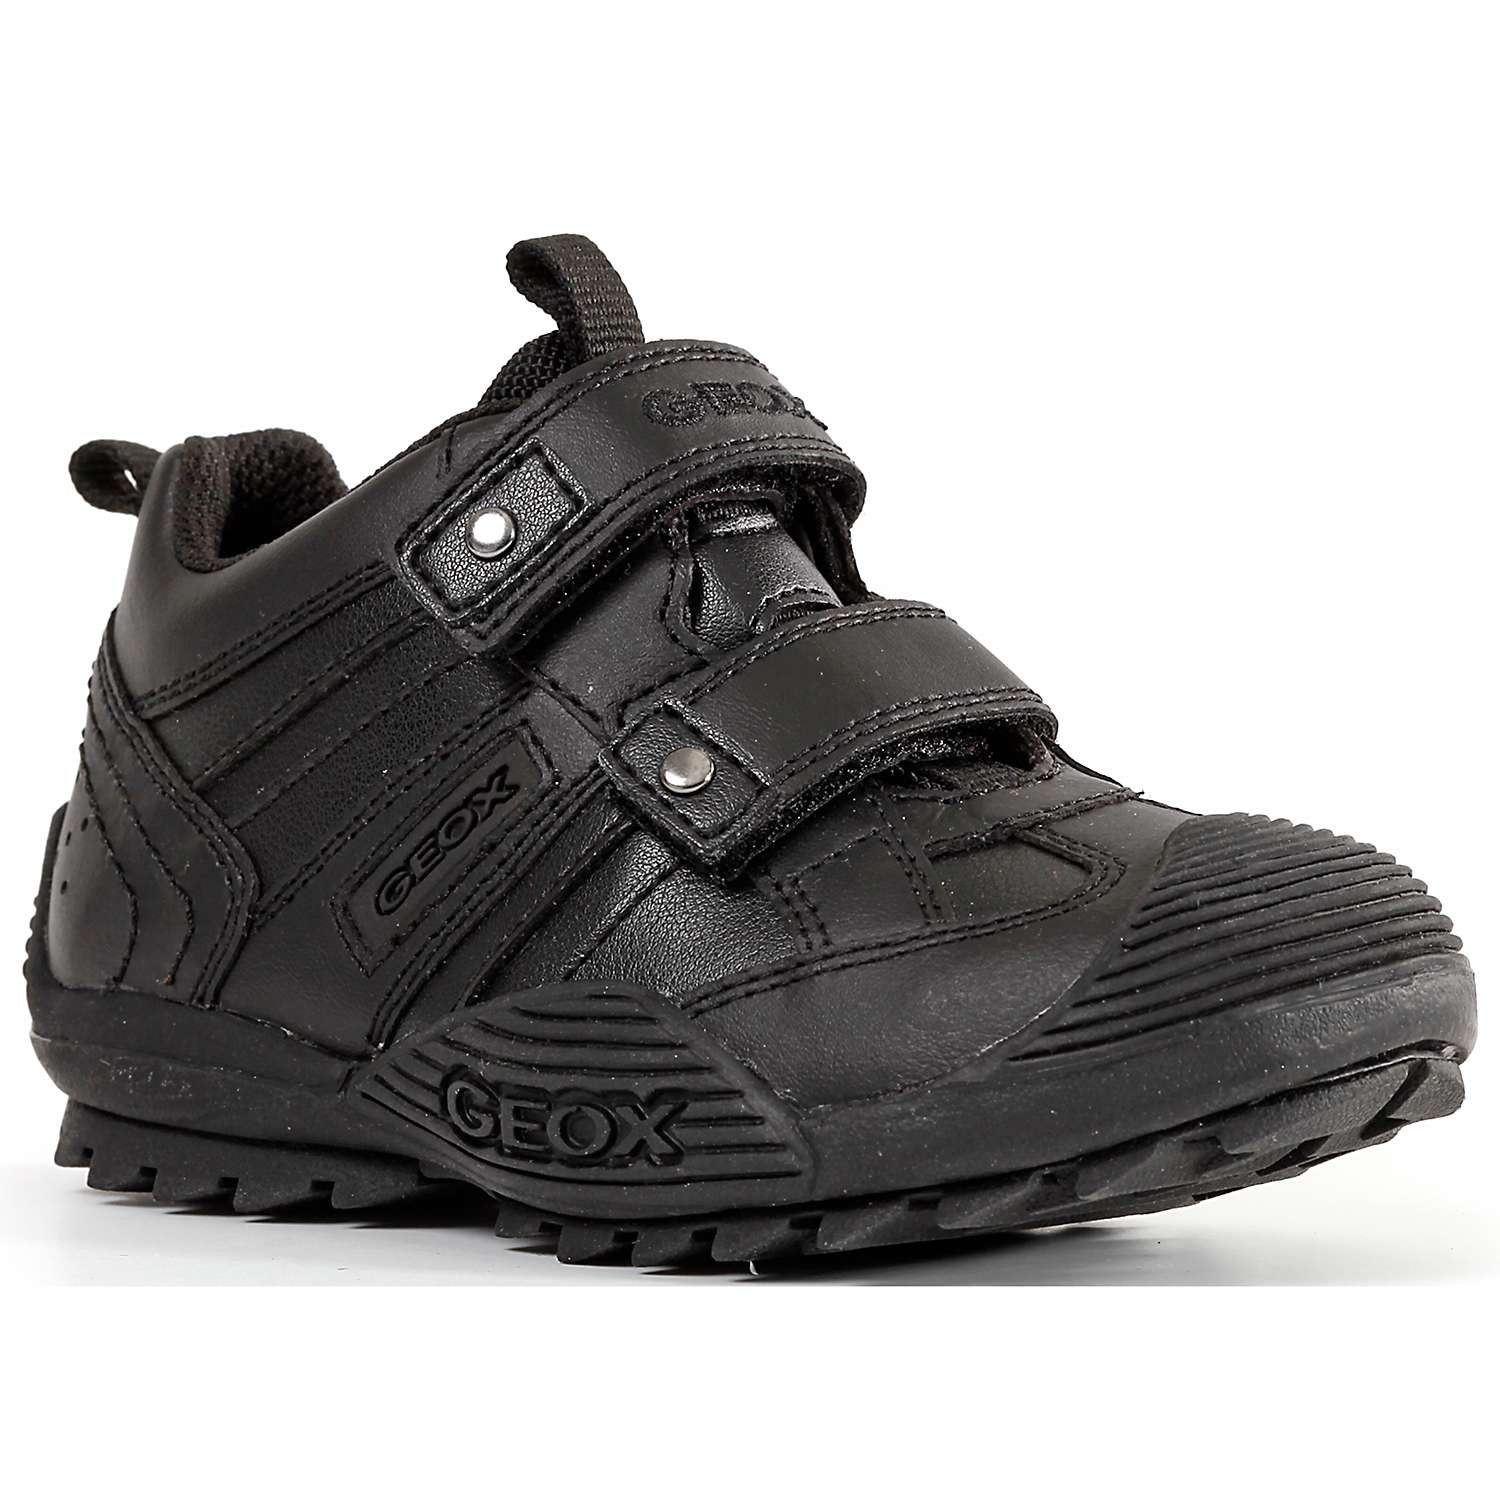 Buy Geox Children's Savage Shoes, Black Online at johnlewis.com